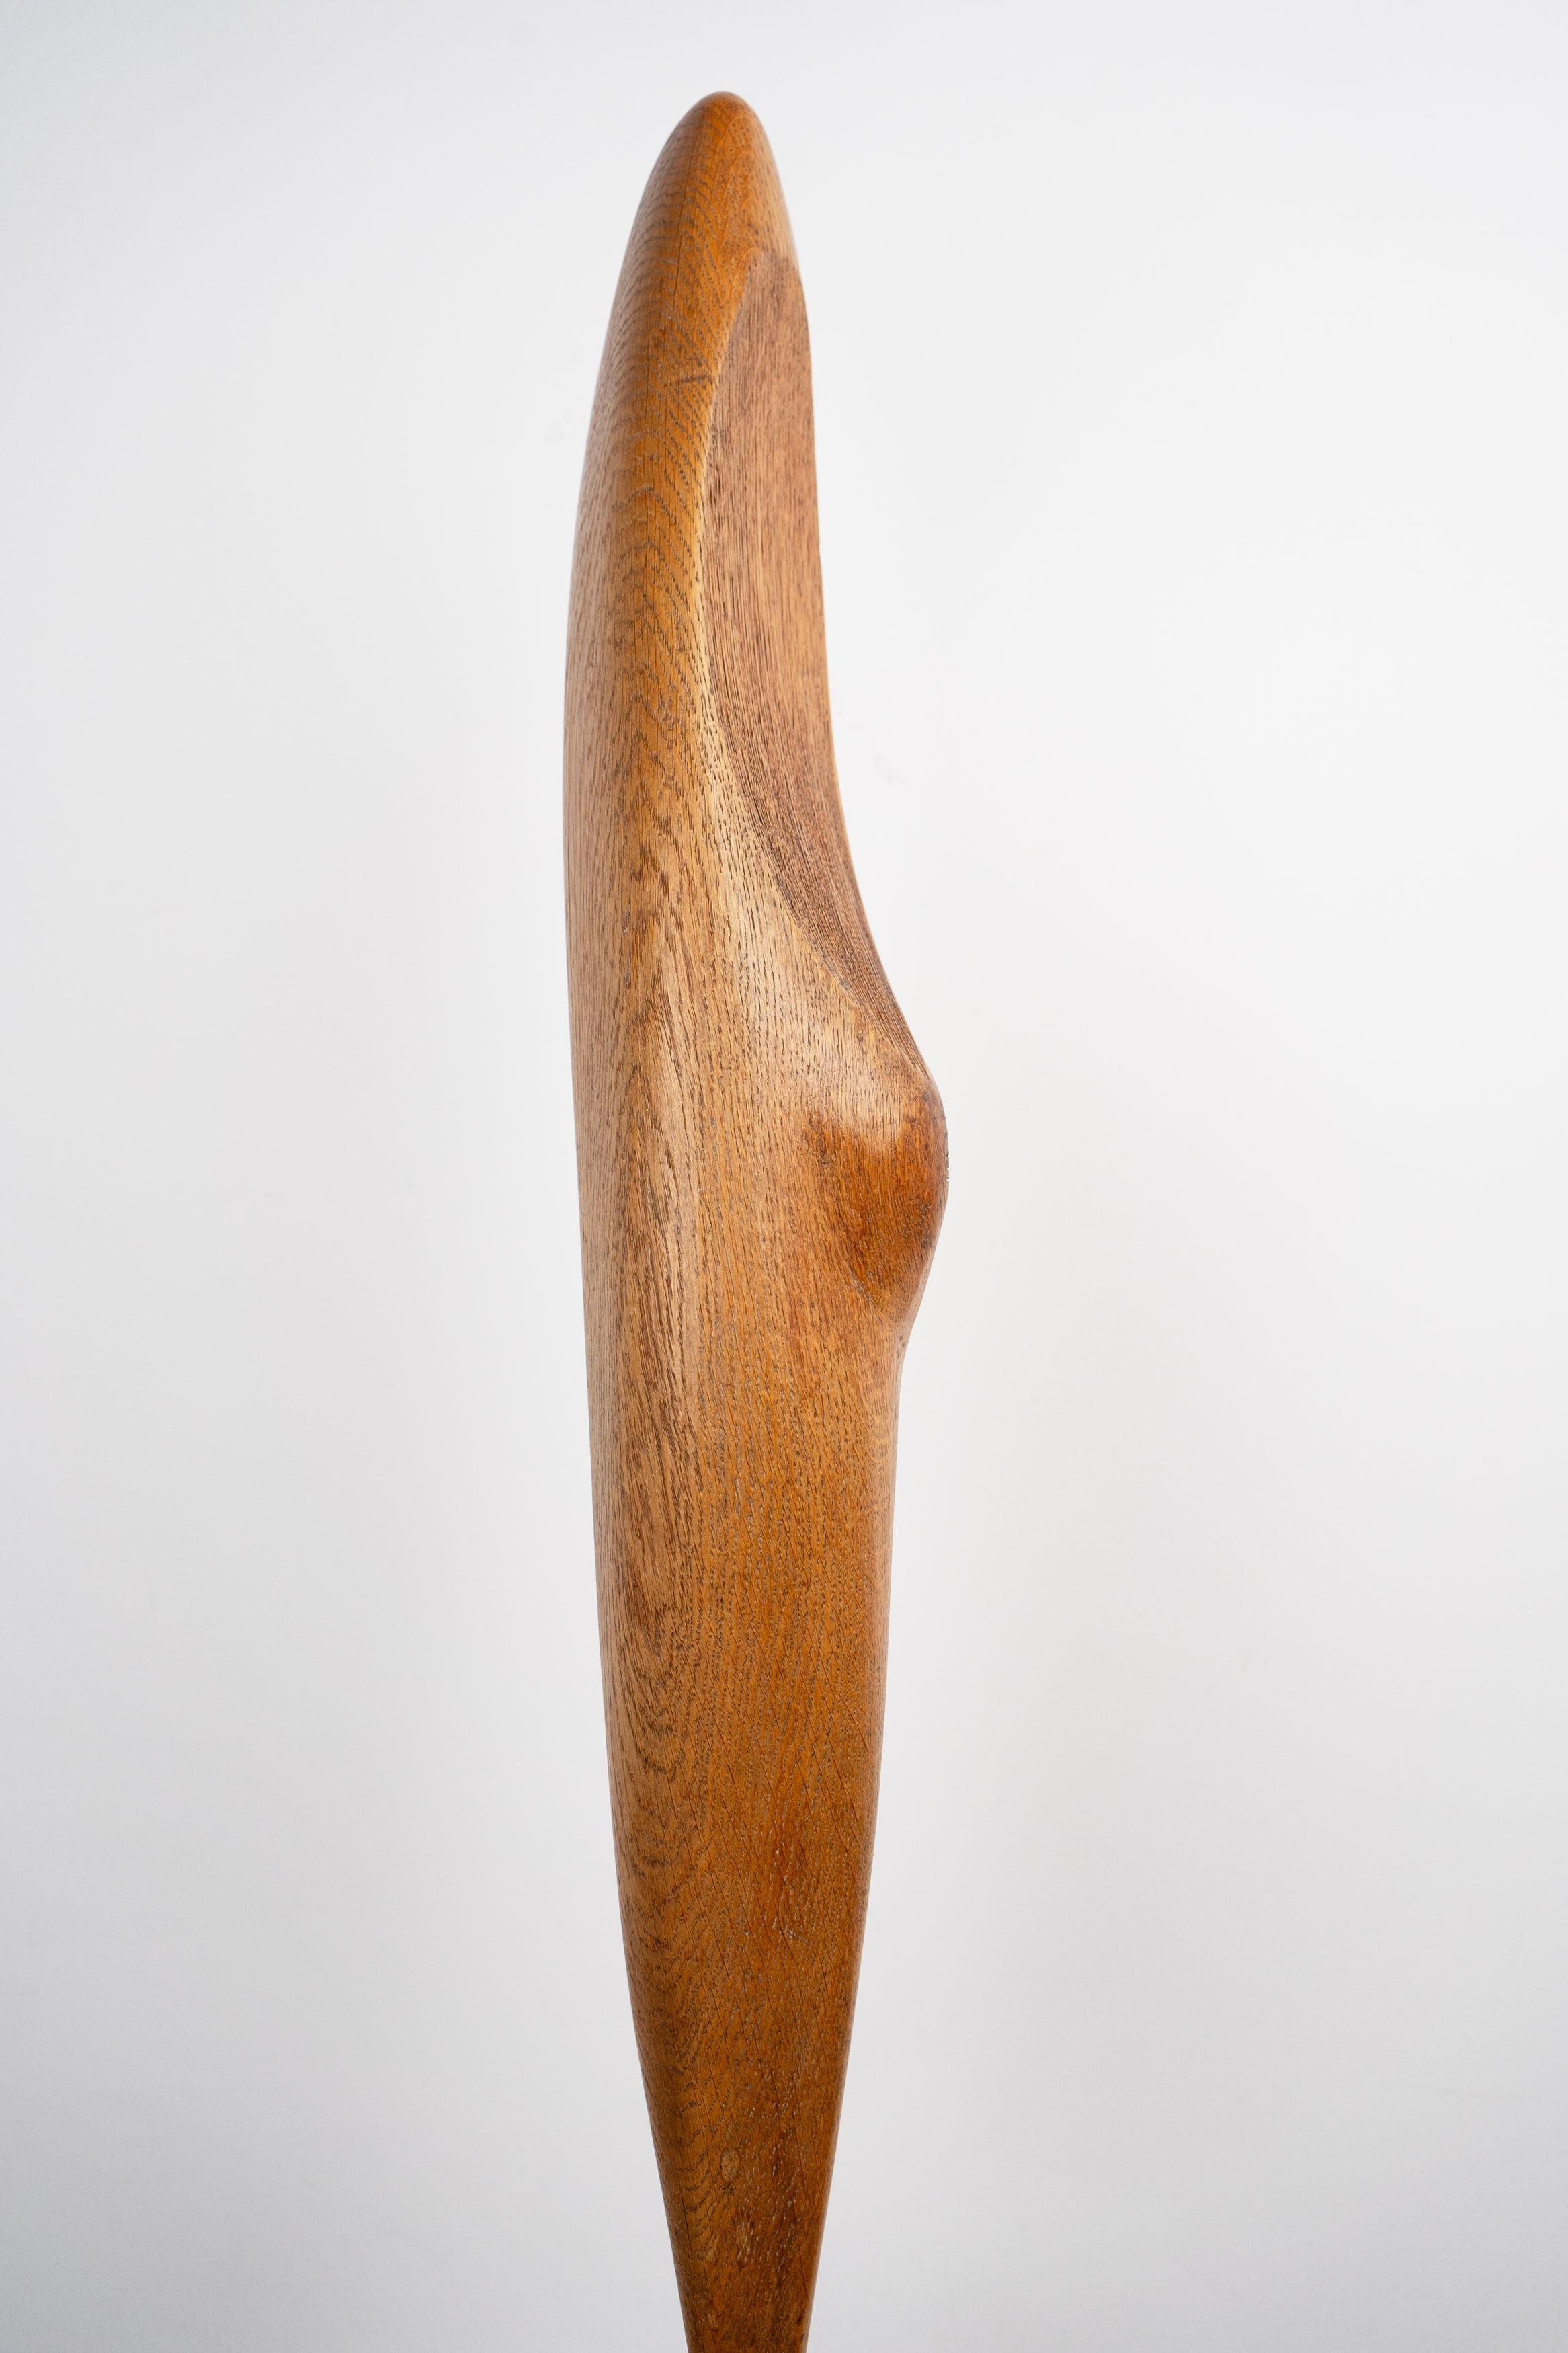 Large Abstract Modernist Oak Sculpture, c.1960 For Sale 3